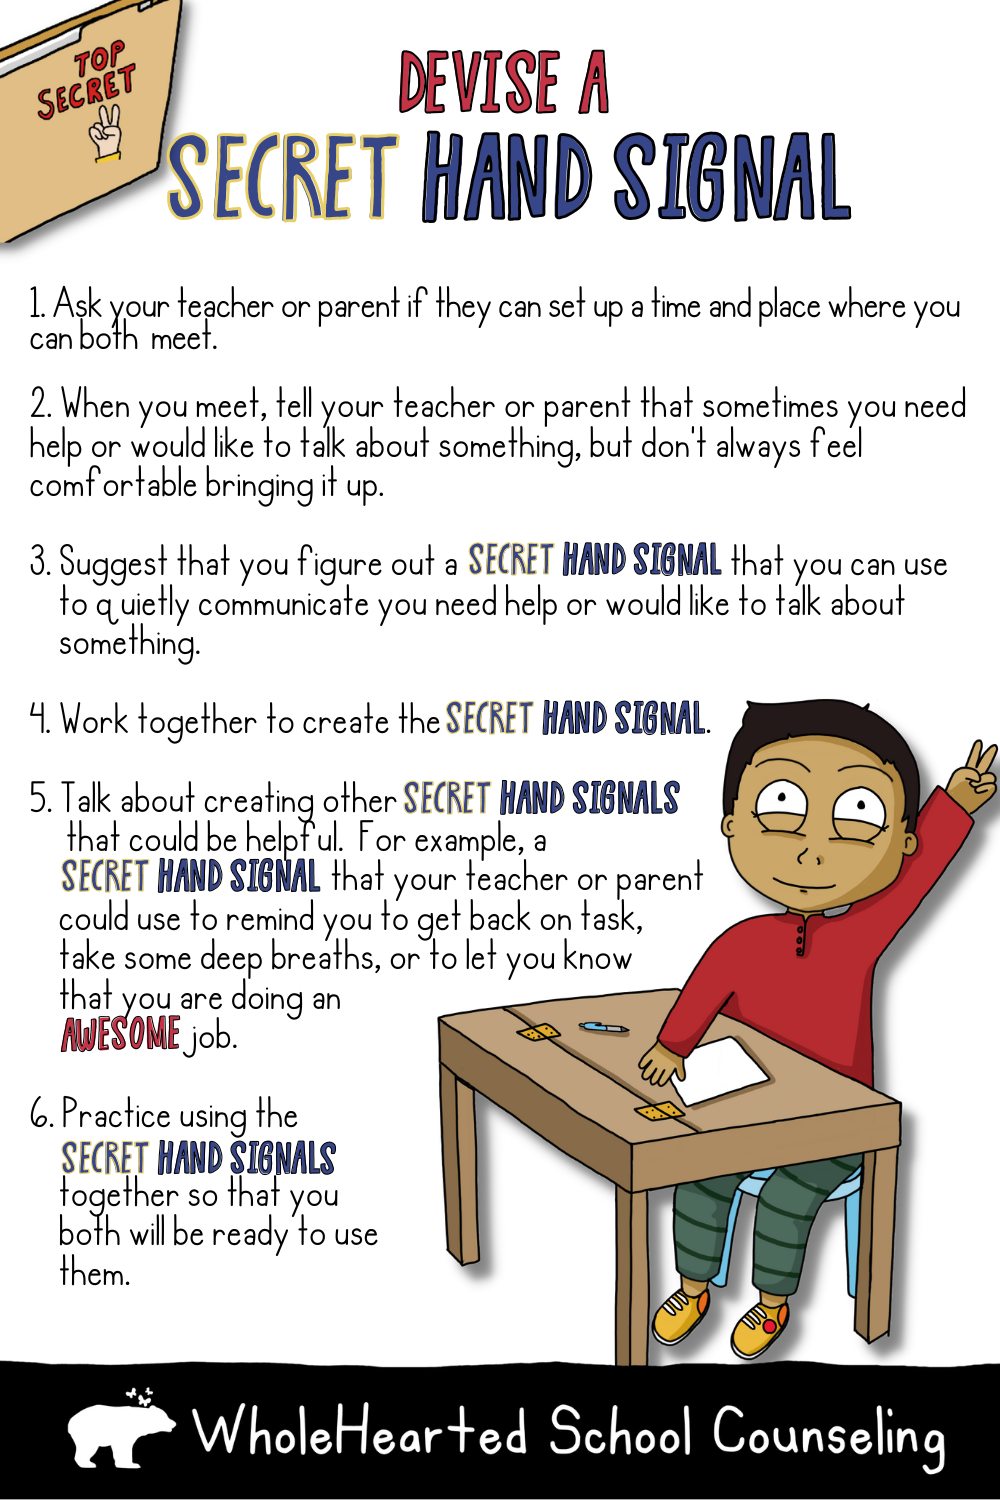 How do devise a secret hand signal instructions for kids